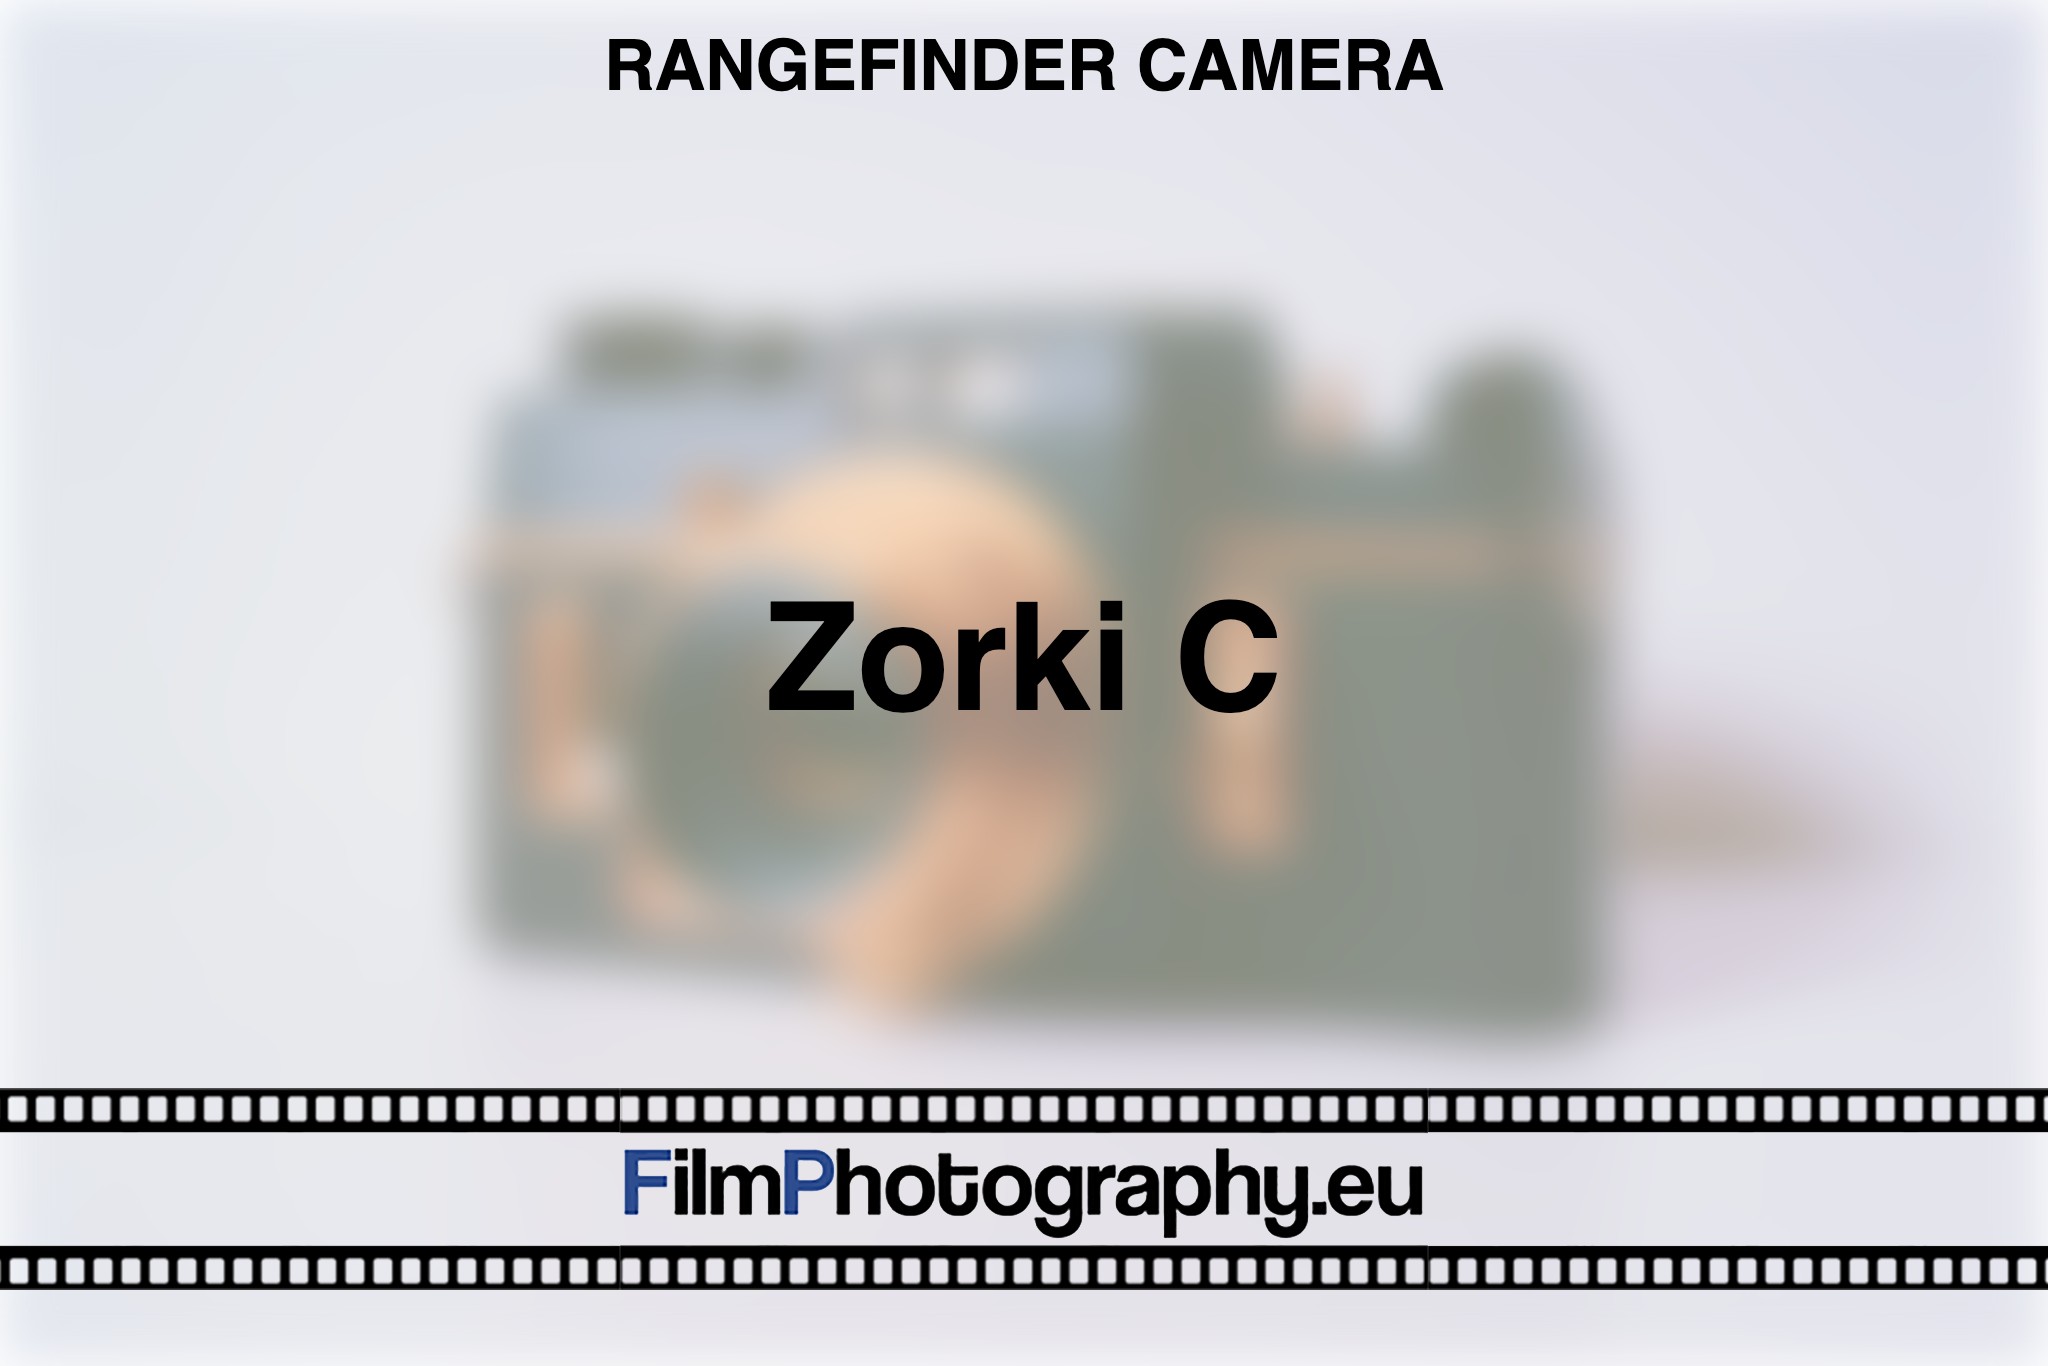 zorki-c-rangefinder-camera-bnv